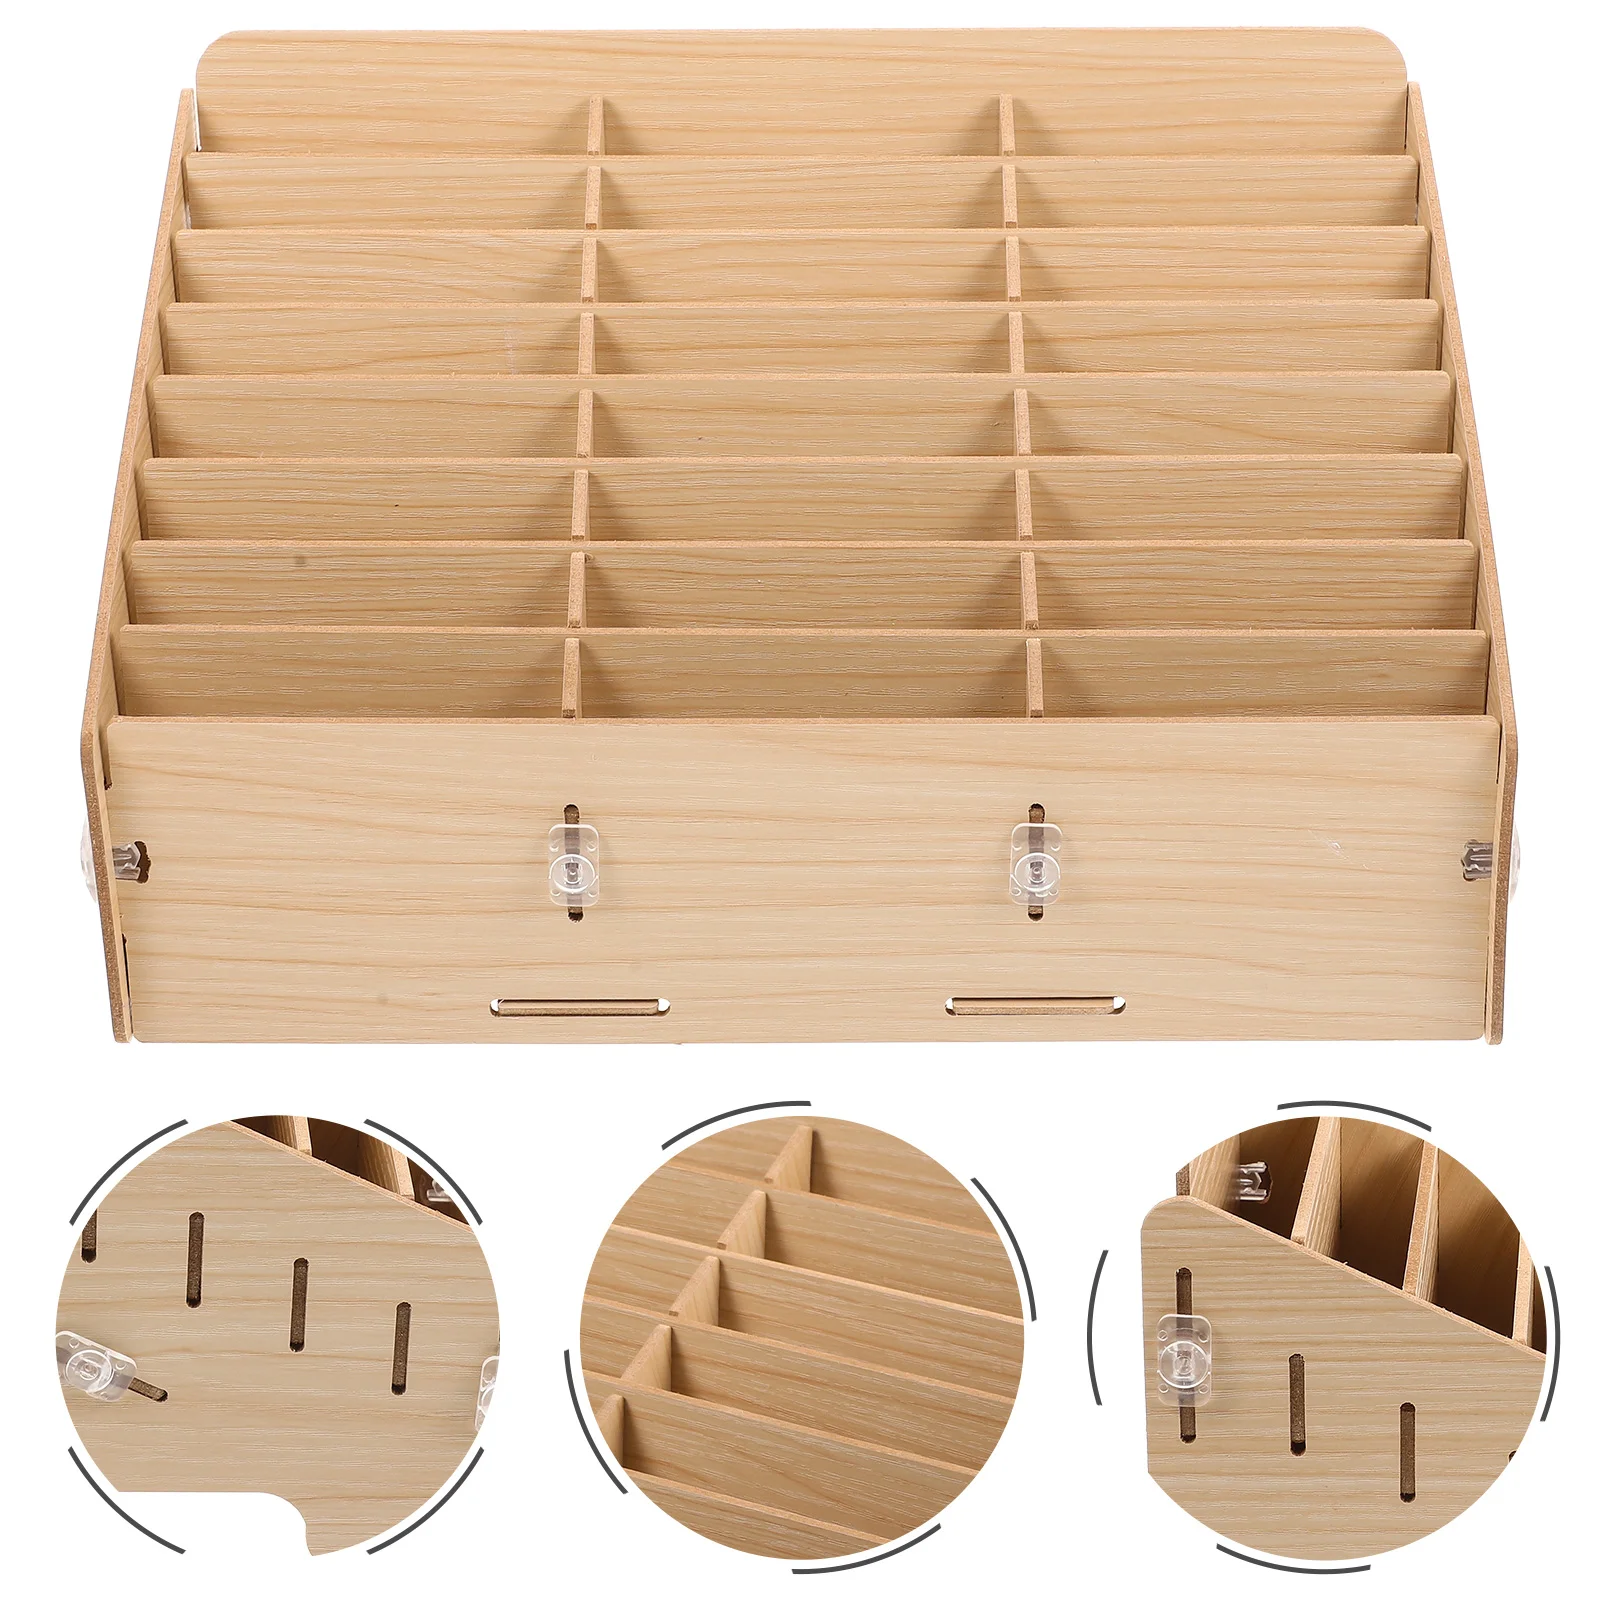 

Box Cell Storage Wooden Holder Desktop Mobile Classroom Containers Case Organizers Cabinetorganizer Bins Calculator Rack Display